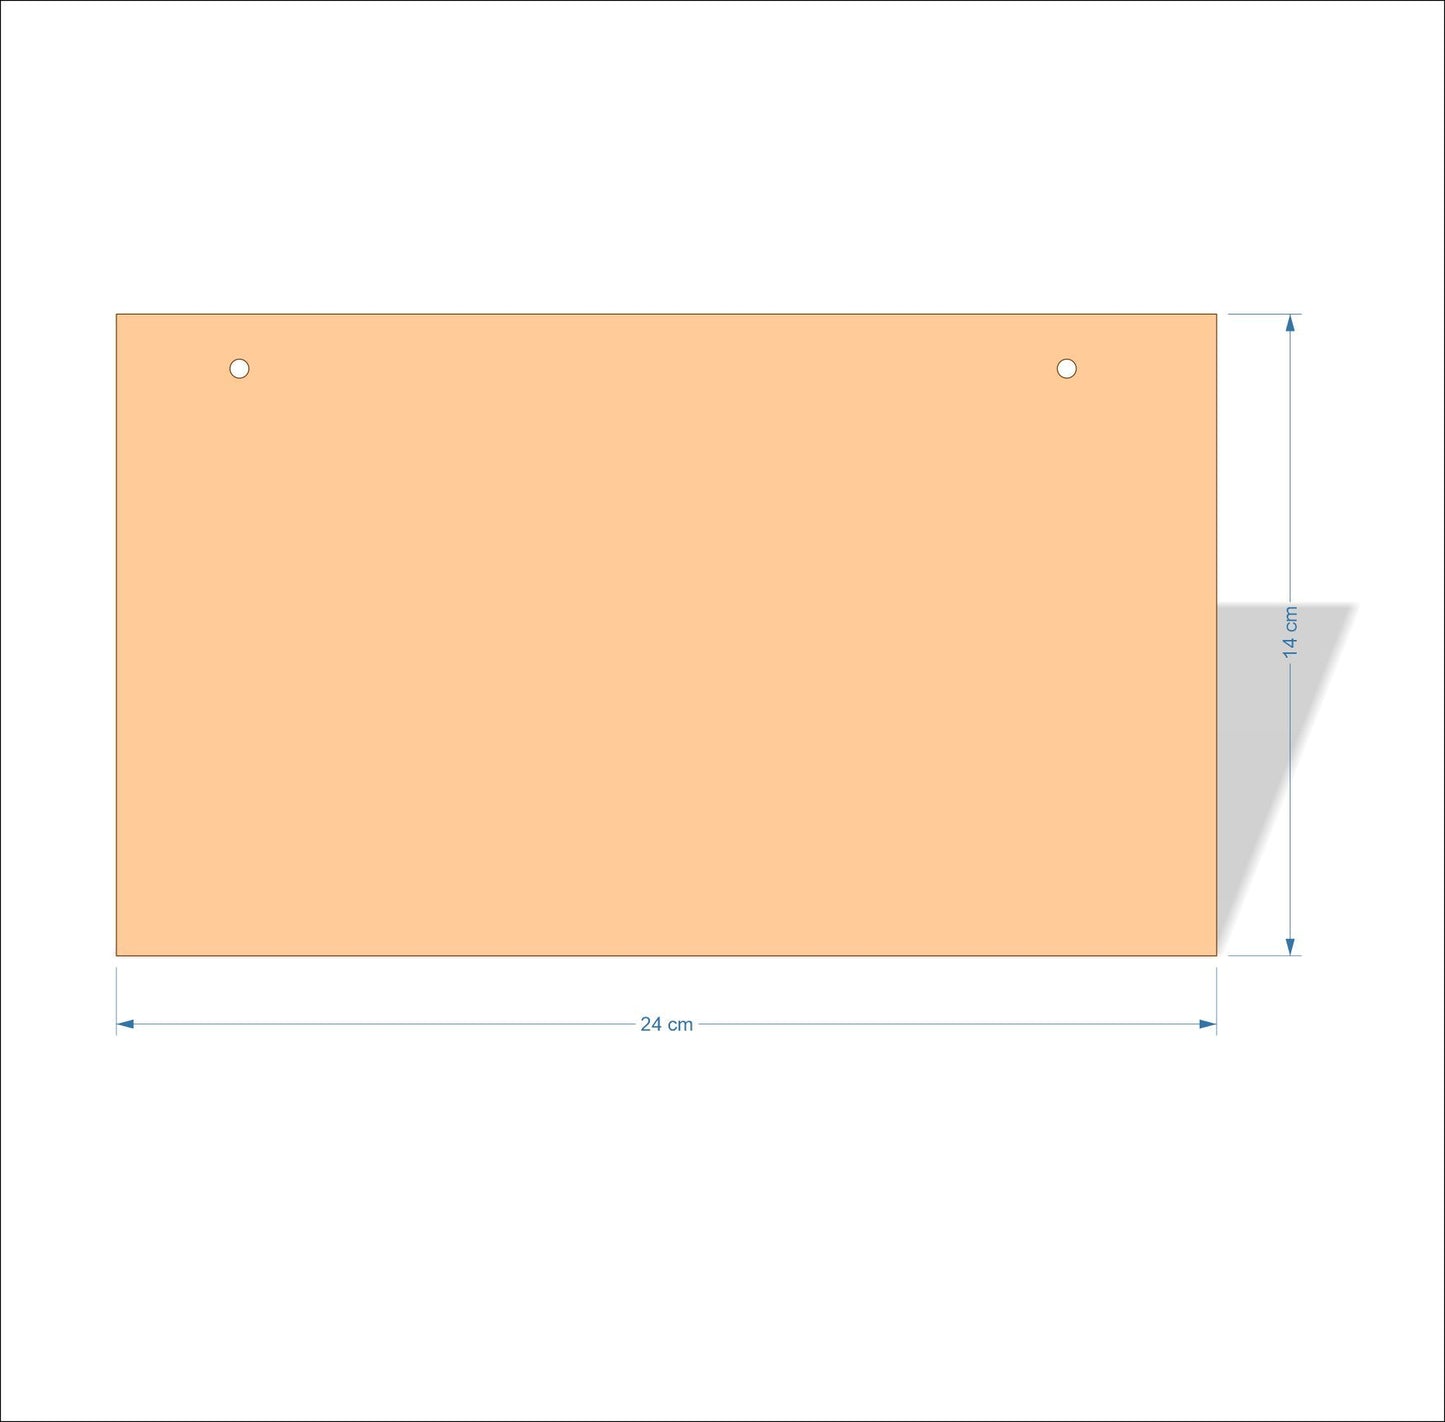 24 cm X 14 cm 3mm MDF Plaques with square corners